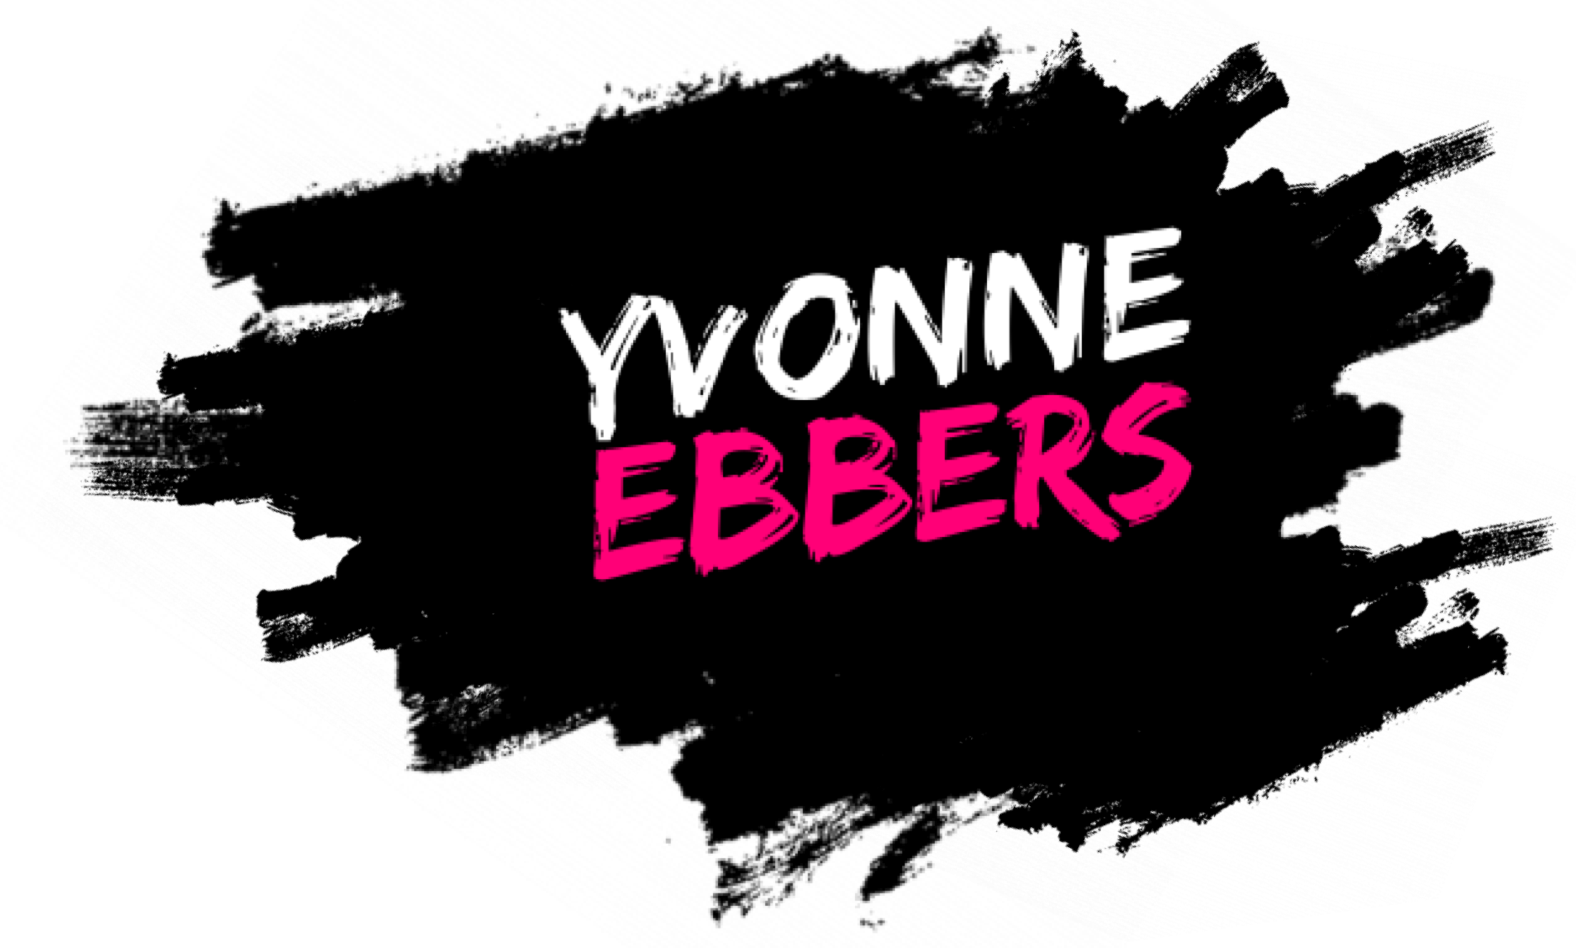 Yvonne Ebbers